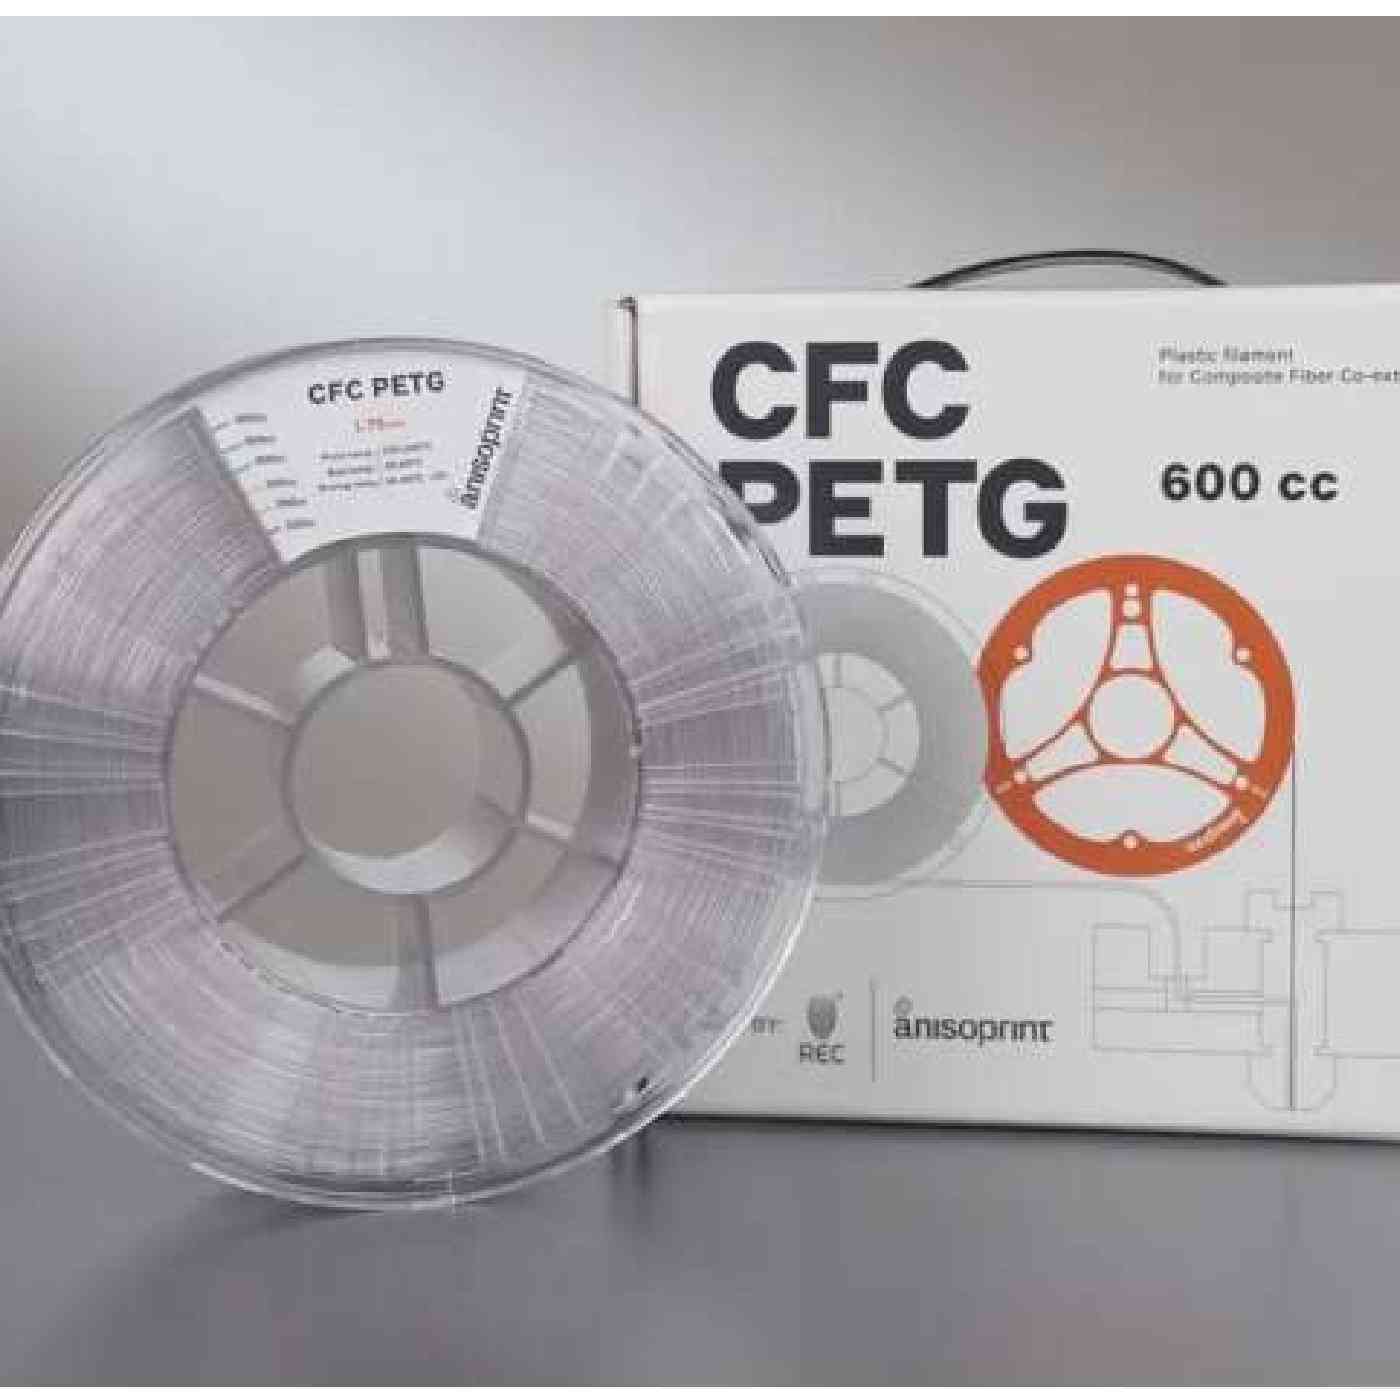 CFC PETG (1)